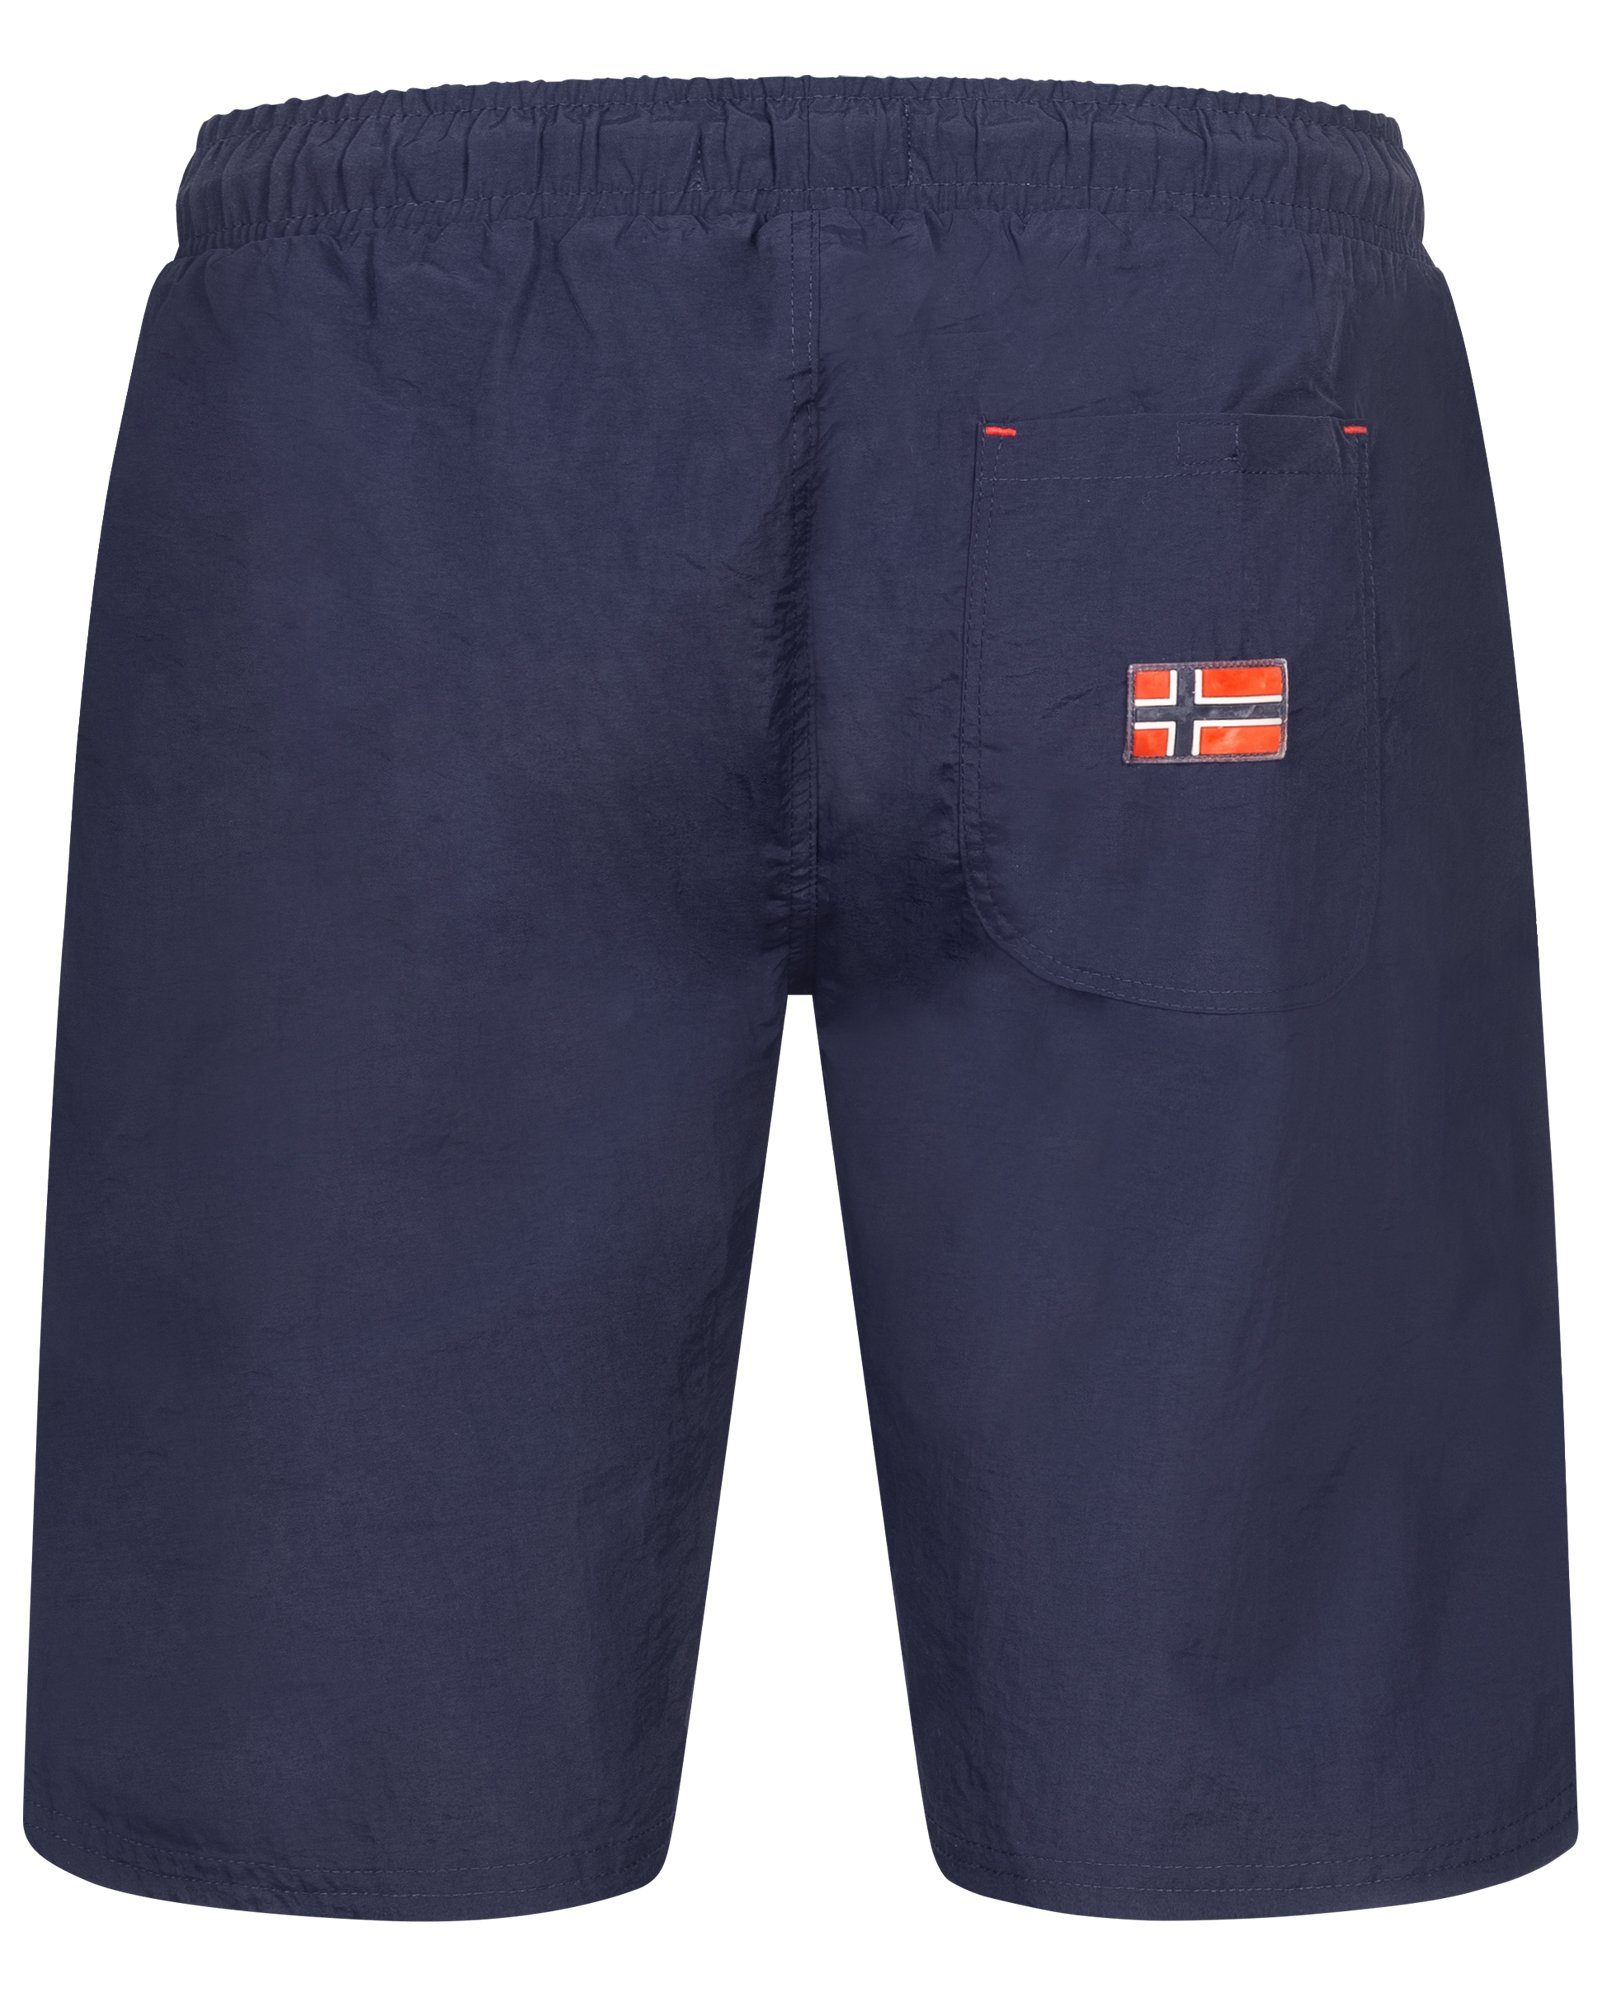 Geographical Norway Badeshorts Lang Hose Sommer Navy Schwimm Bade Herren Shorts Beach Bermuda Shorts Bade